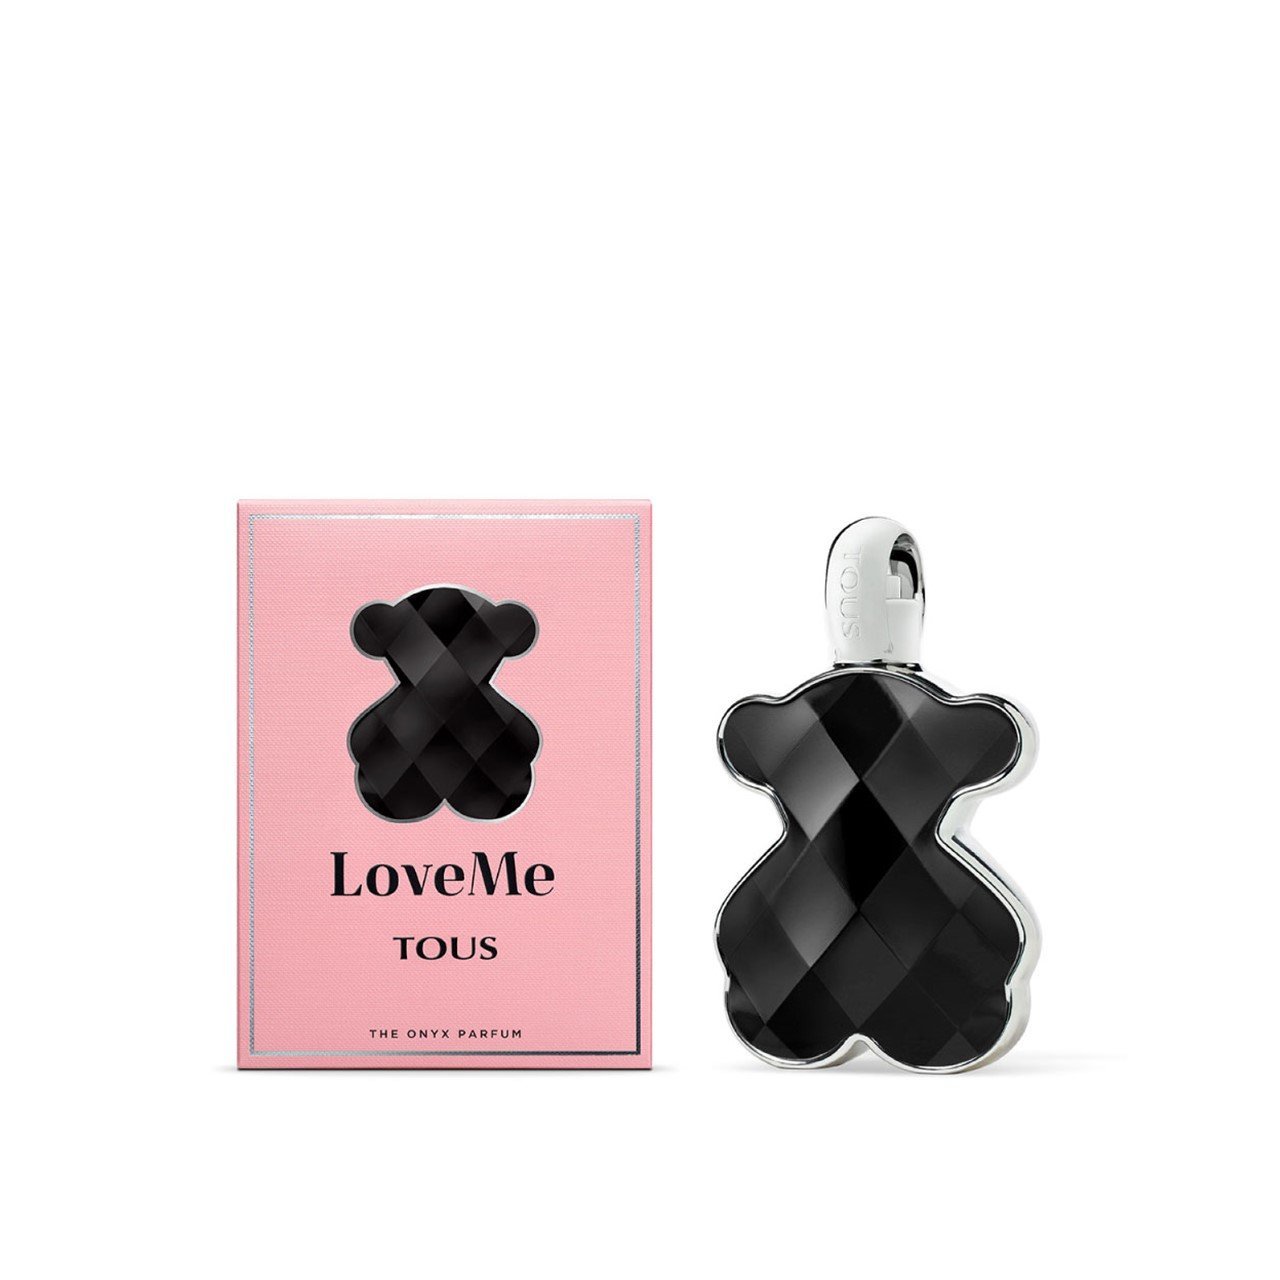 Tous Loveme The Onyx Parfum | My Perfume Shop Australia